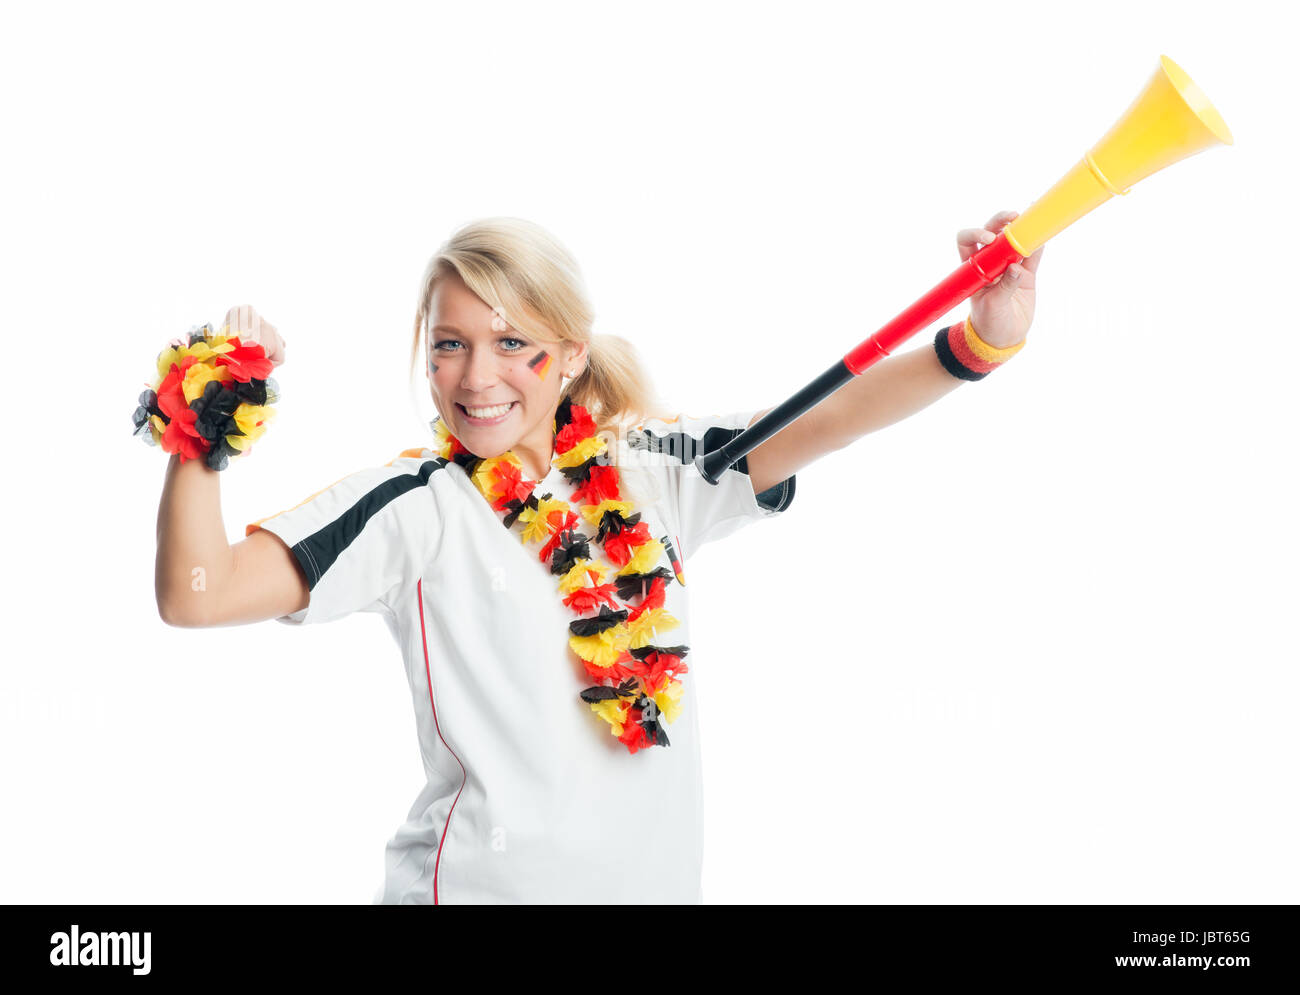 blonde football fan with vuvuzela Stock Photo - Alamy